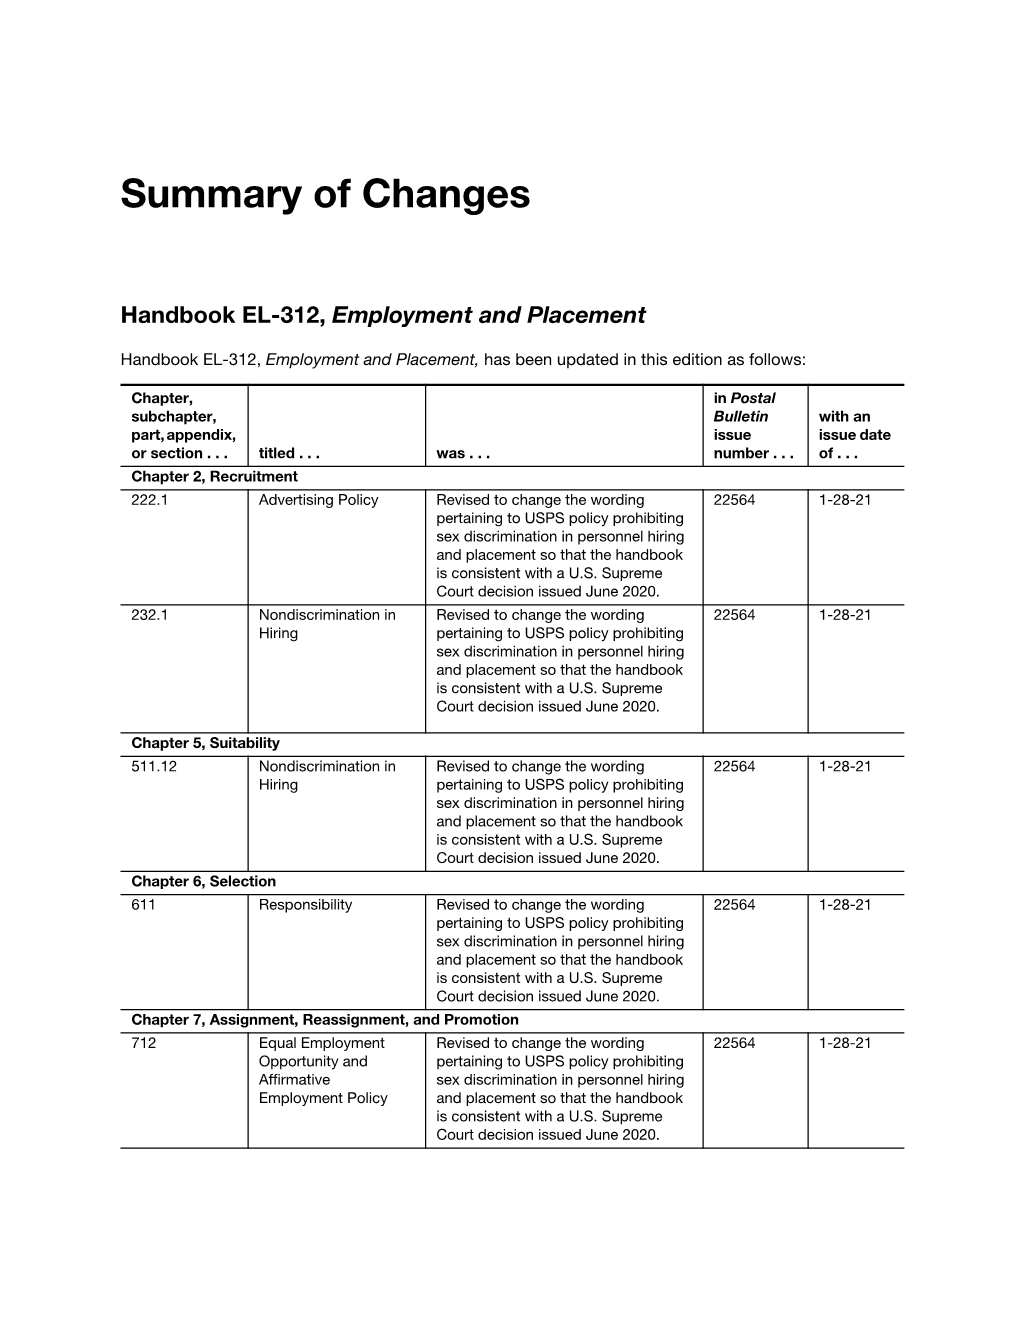 Handbook EL-312, Employment and Placement